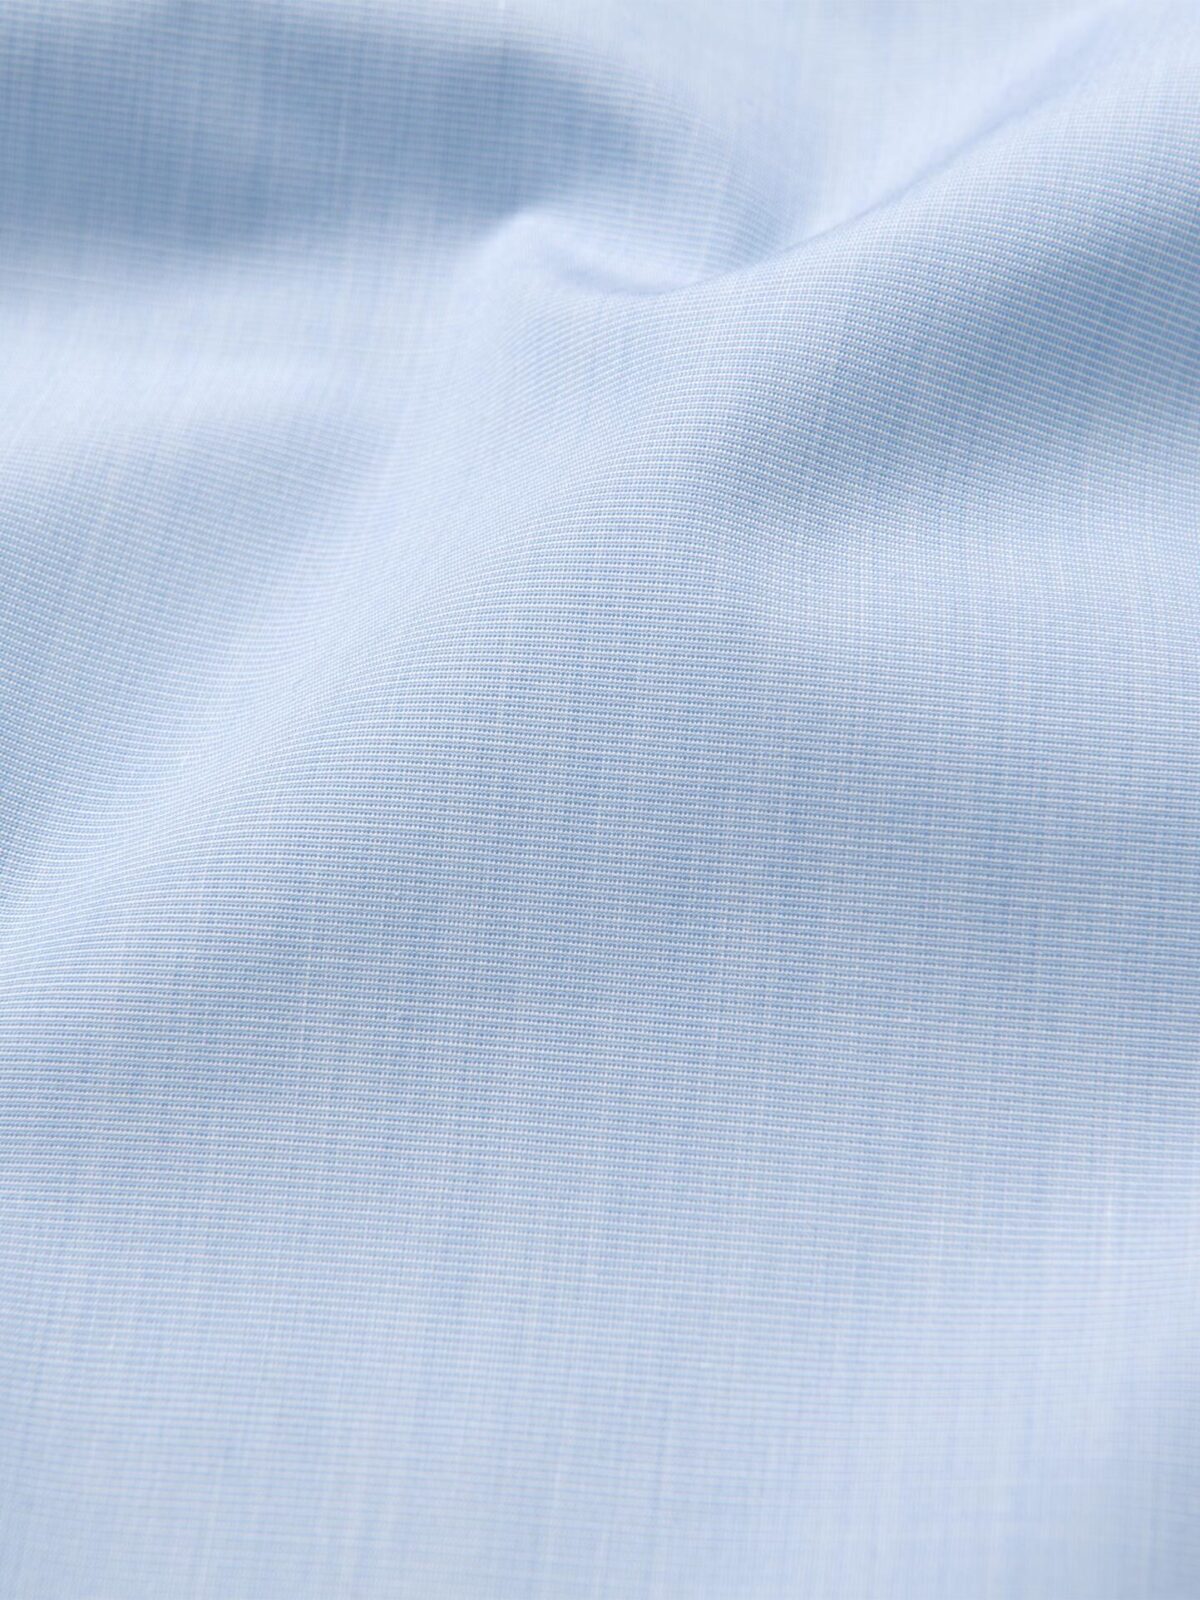 Thomas Mason Luxury Light Blue End-on-End Shirts by Proper Cloth